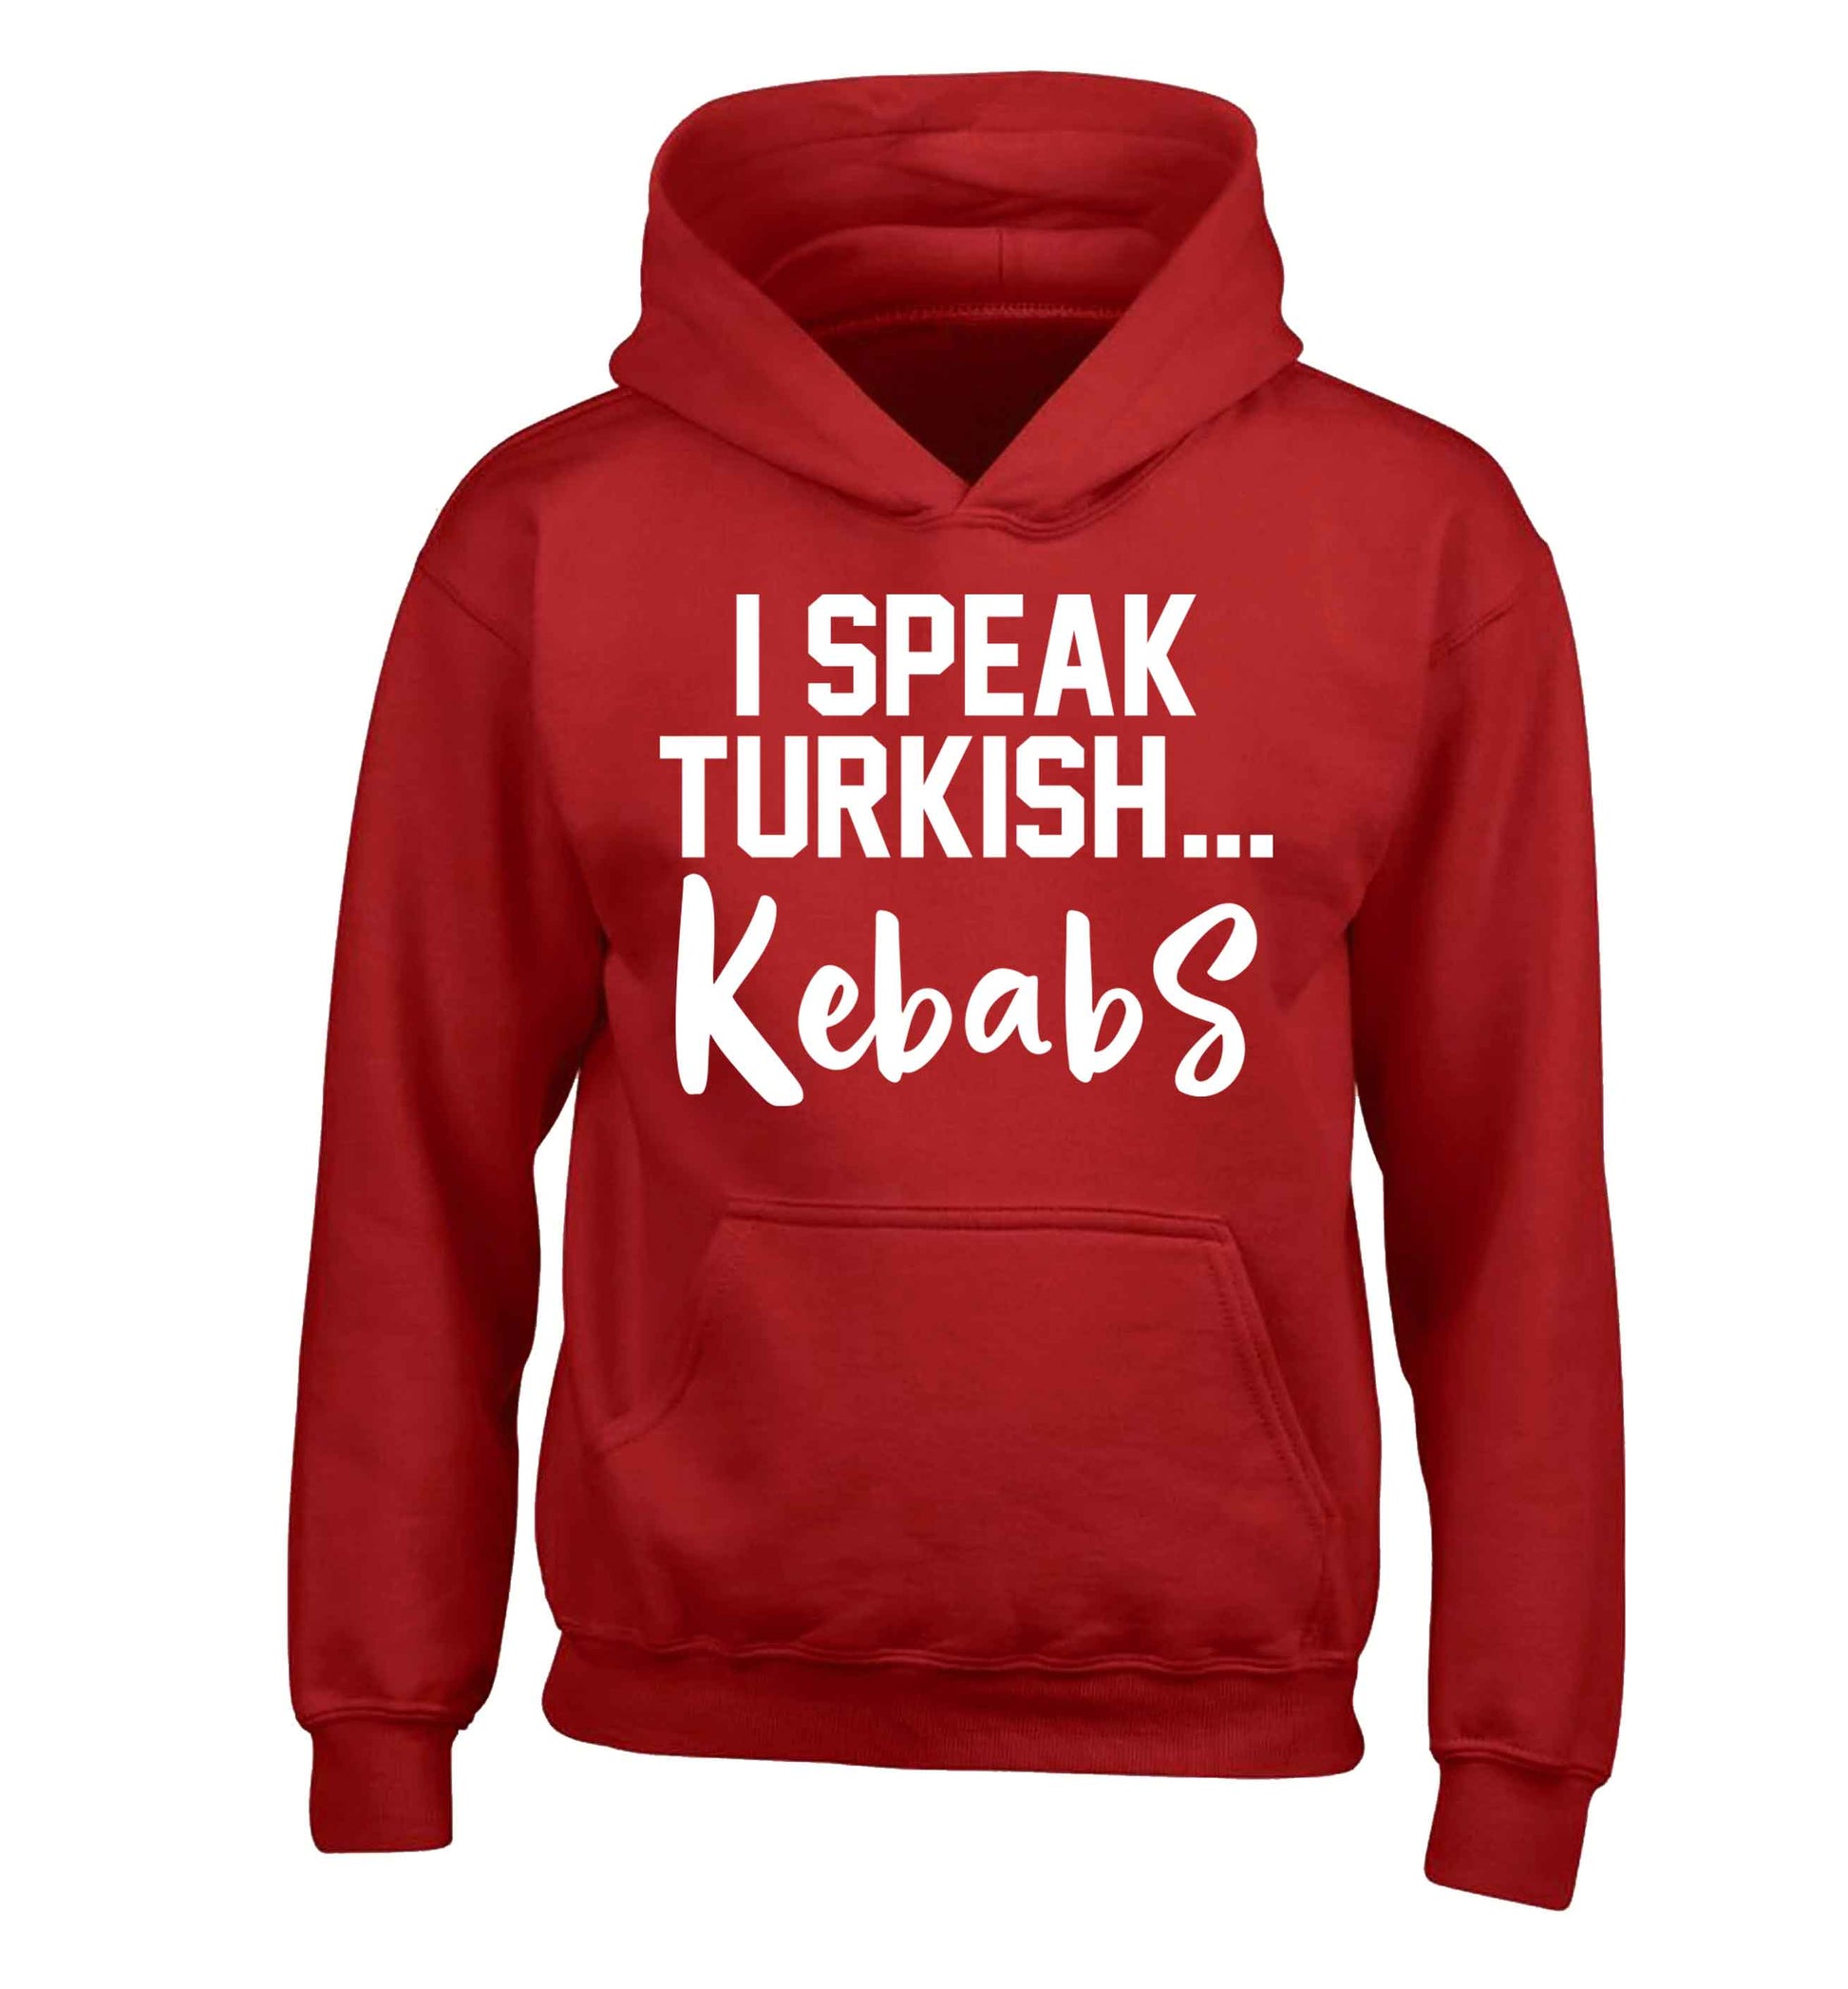 I speak Turkish...kebabs children's red hoodie 12-13 Years